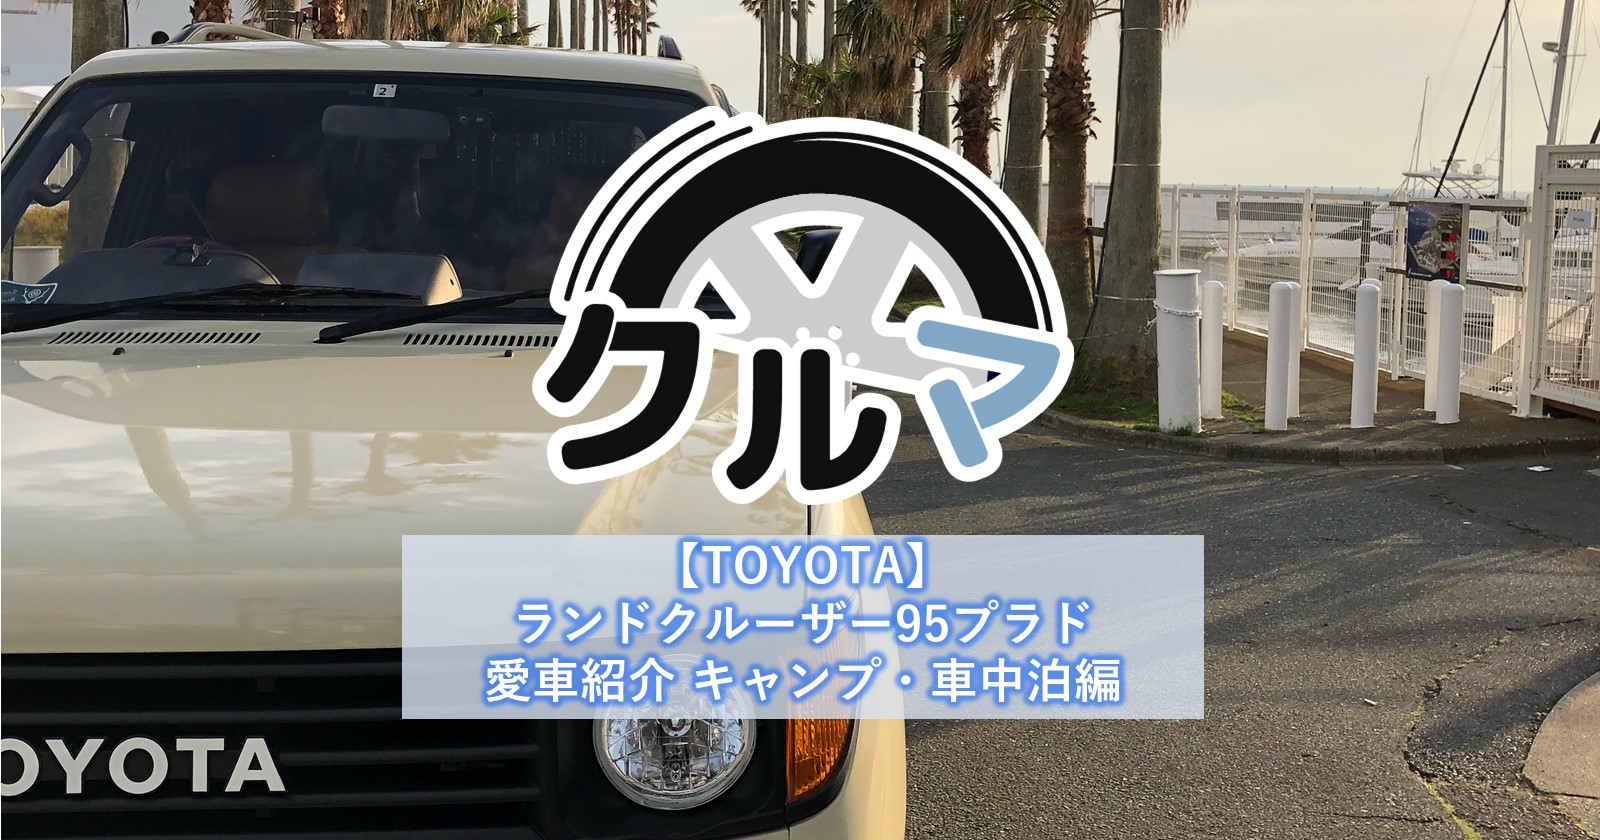 Toyota ランドクルーザー 95プラド 愛車紹介 キャンプ 車中泊編 キャンプ アウトドアのtakibi タキビ